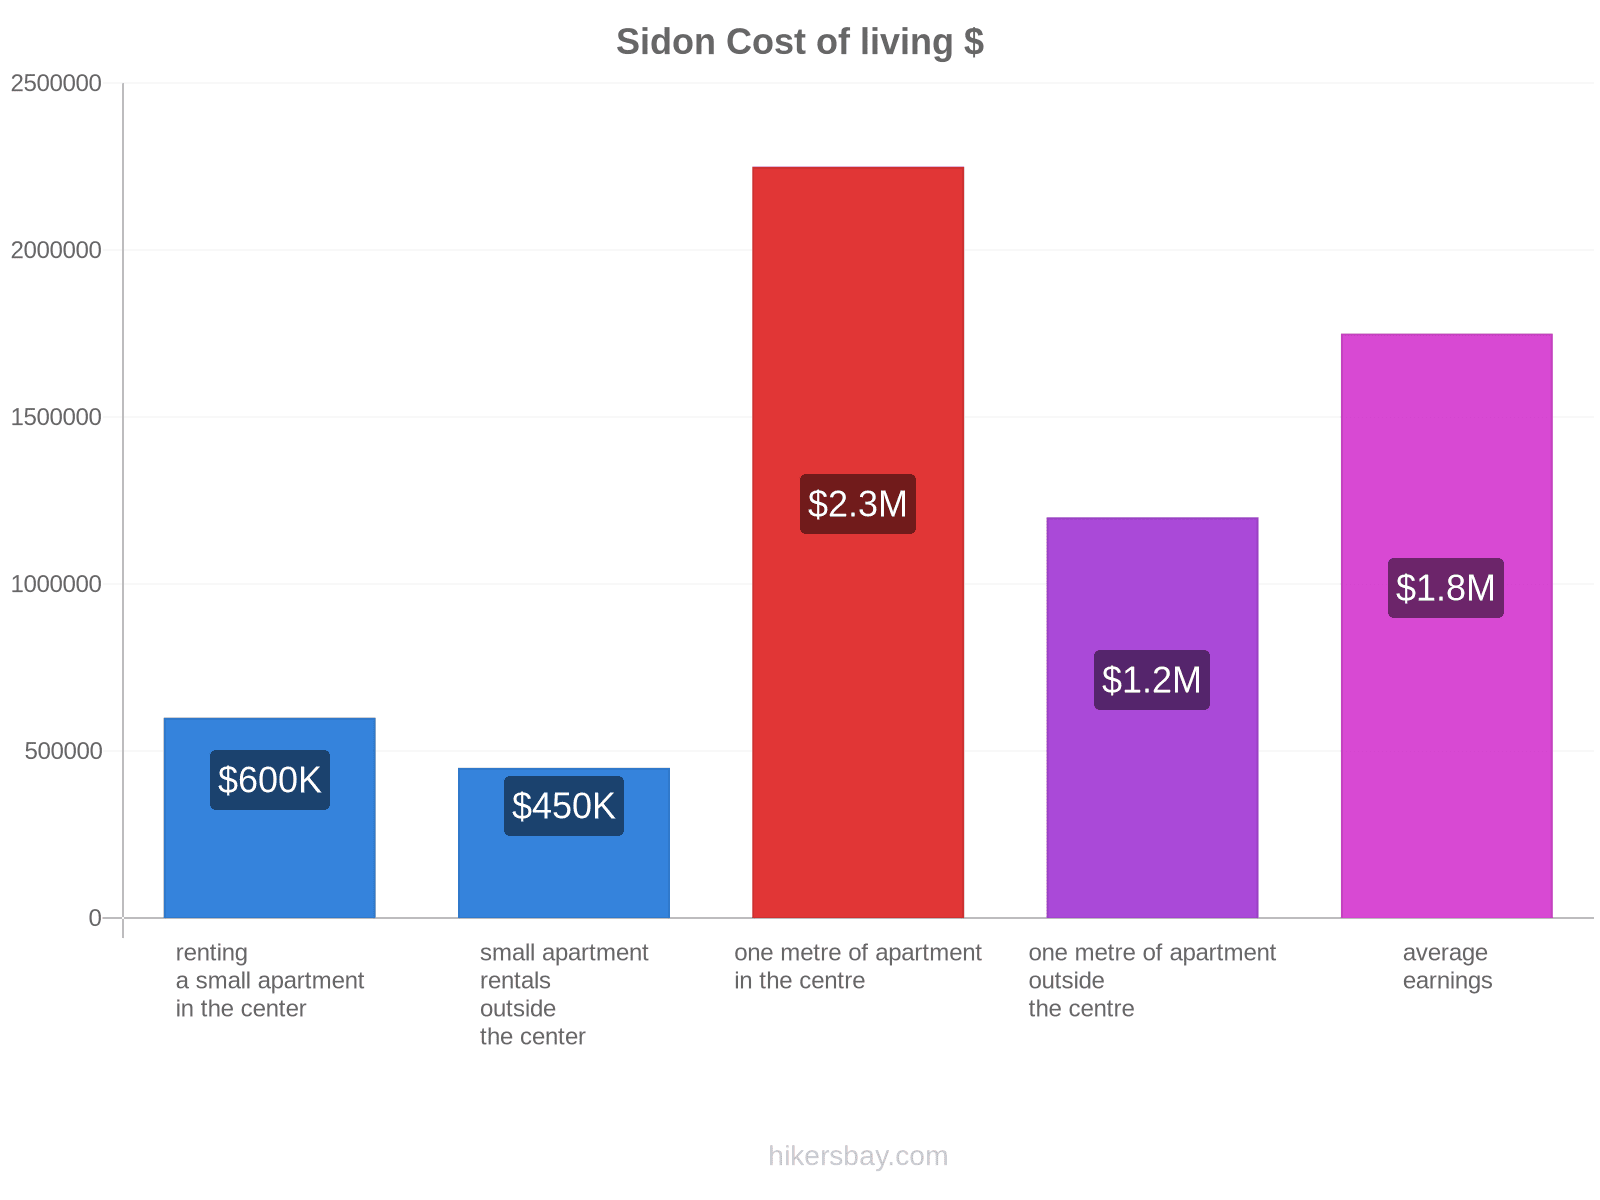 Sidon cost of living hikersbay.com